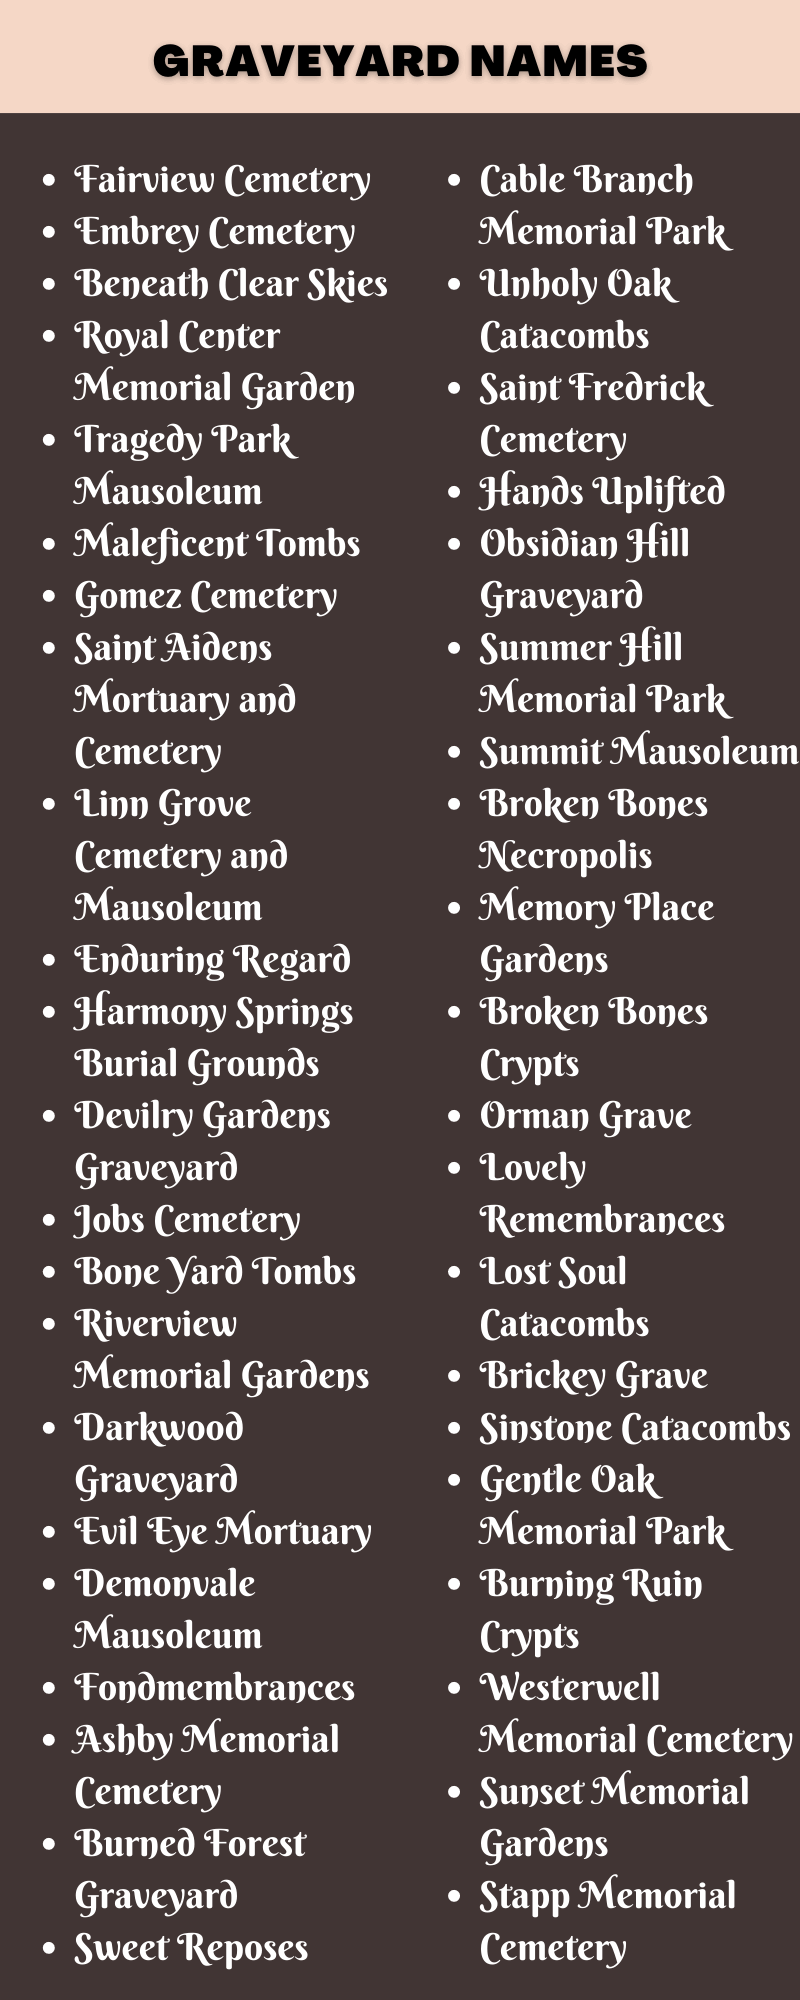 Graveyard Names